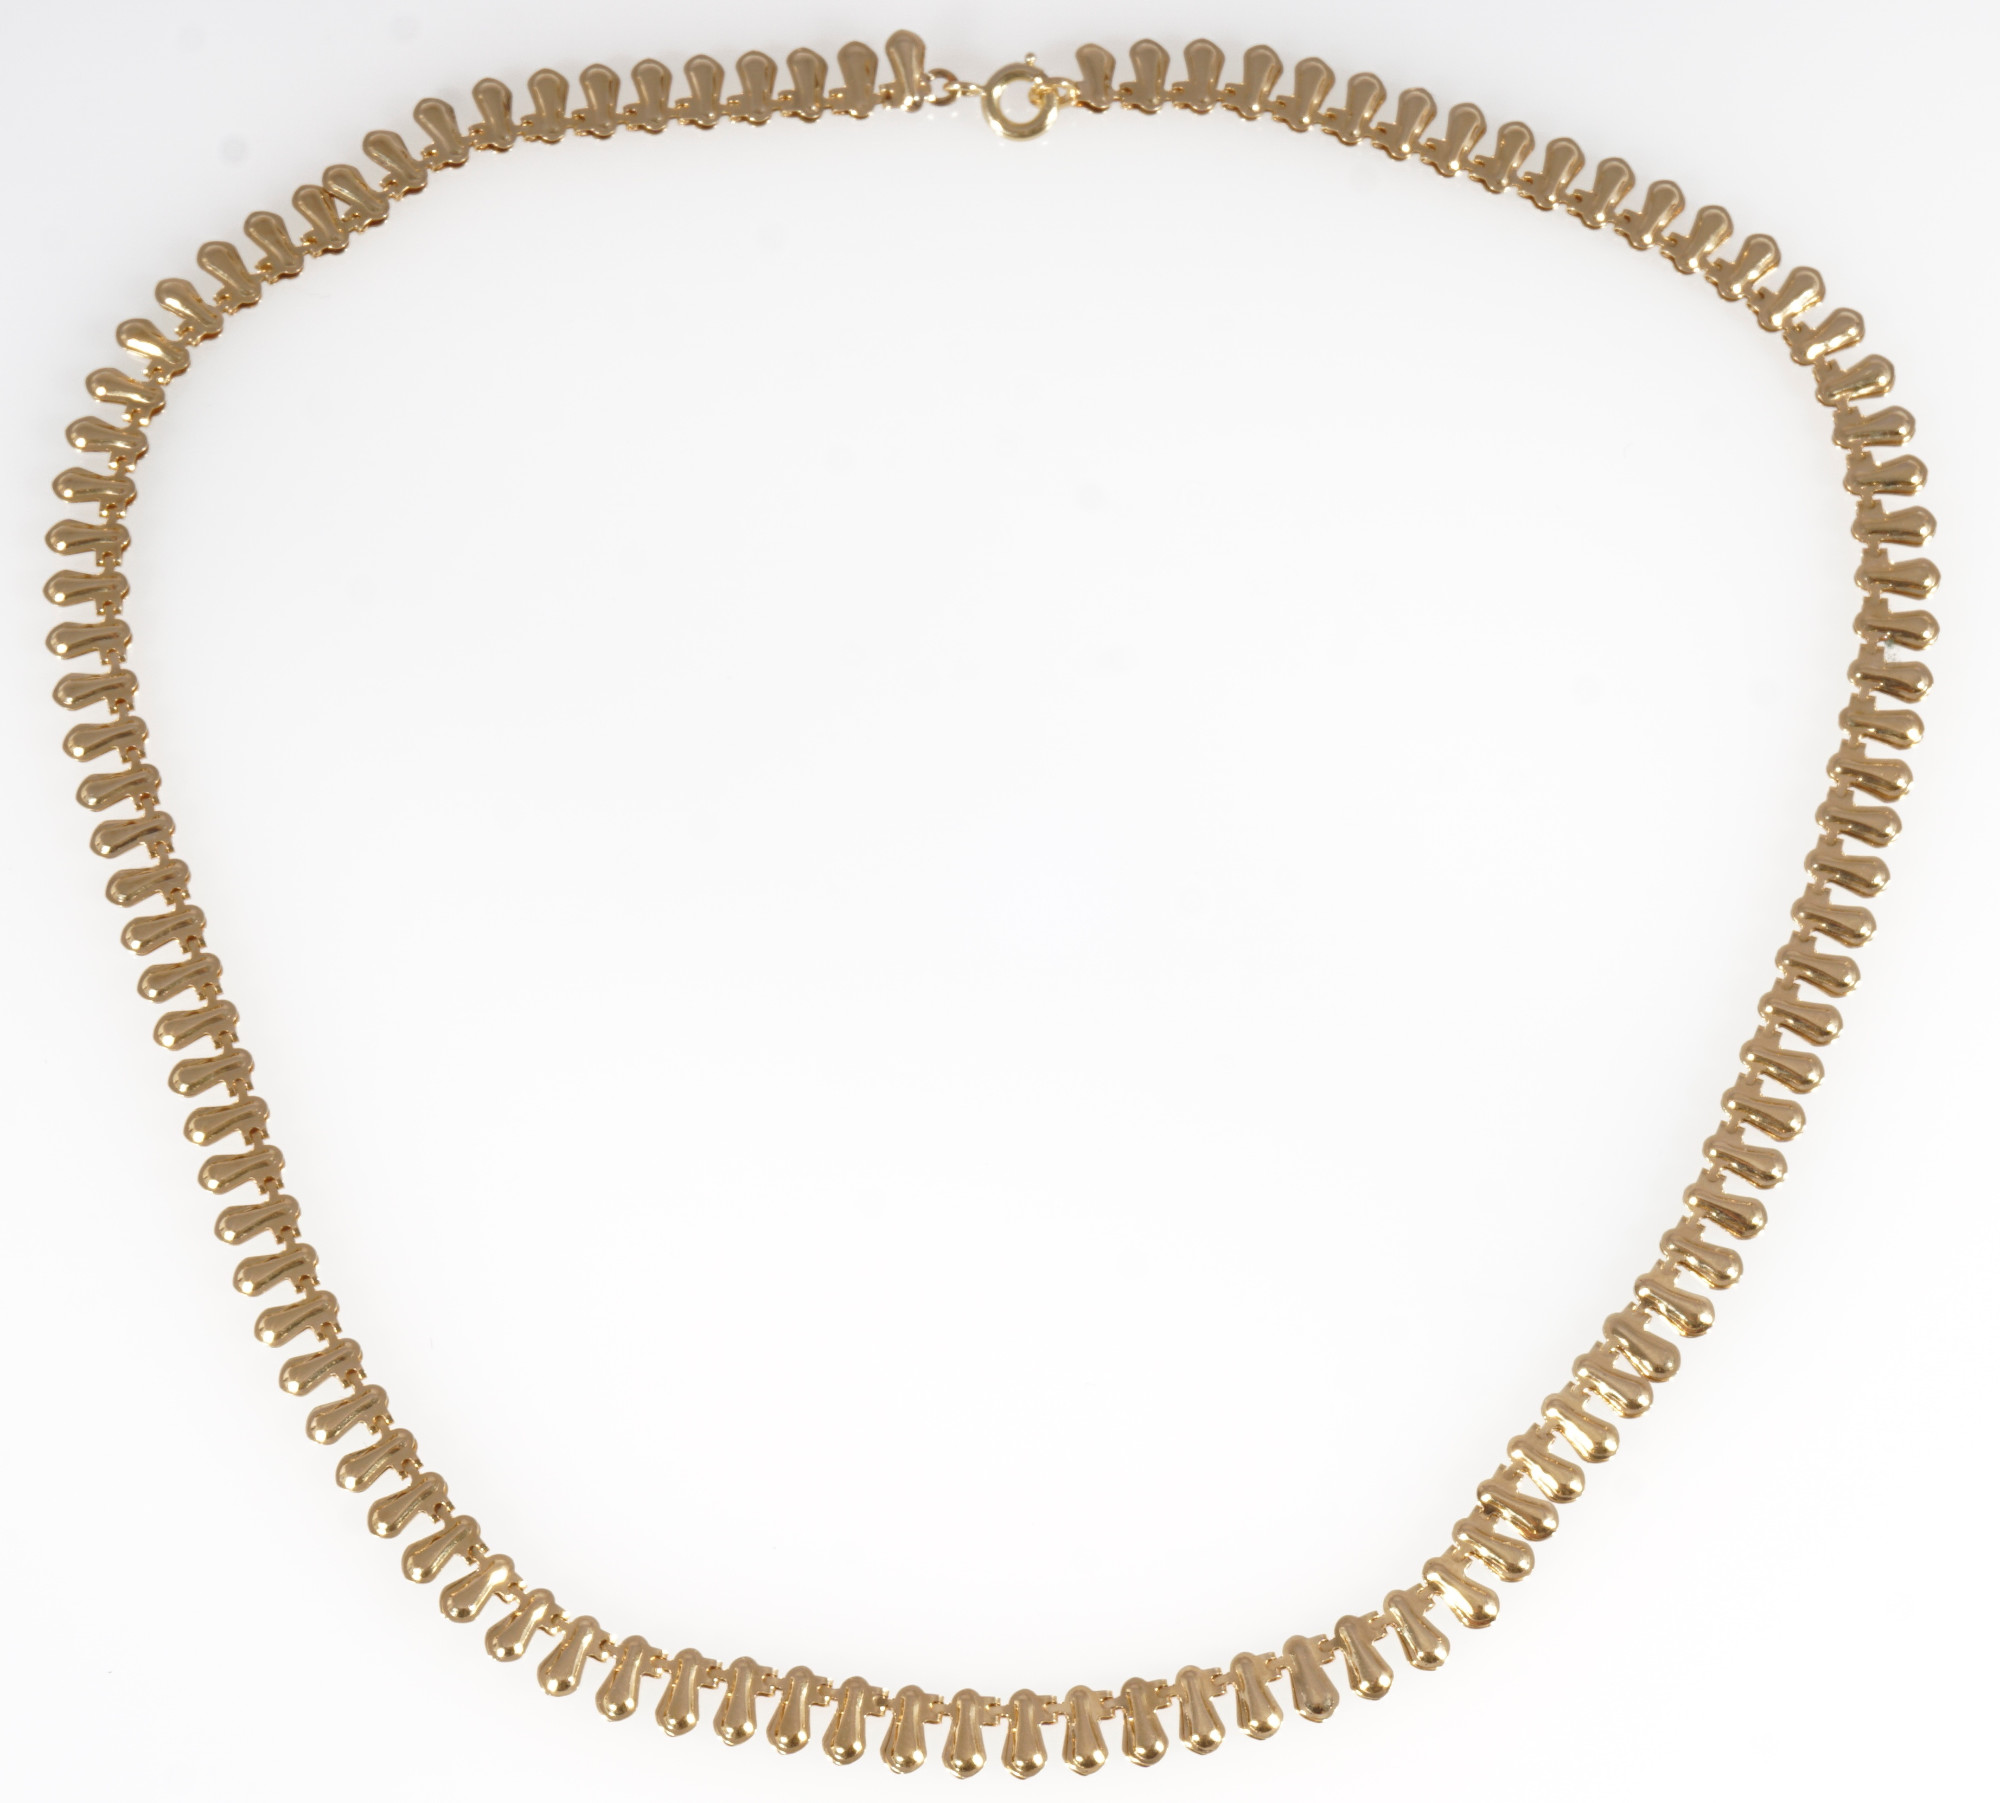 750 gold necklace in drop shape, 18K Gold Collier / Halskette in Tropenform, - Image 2 of 4